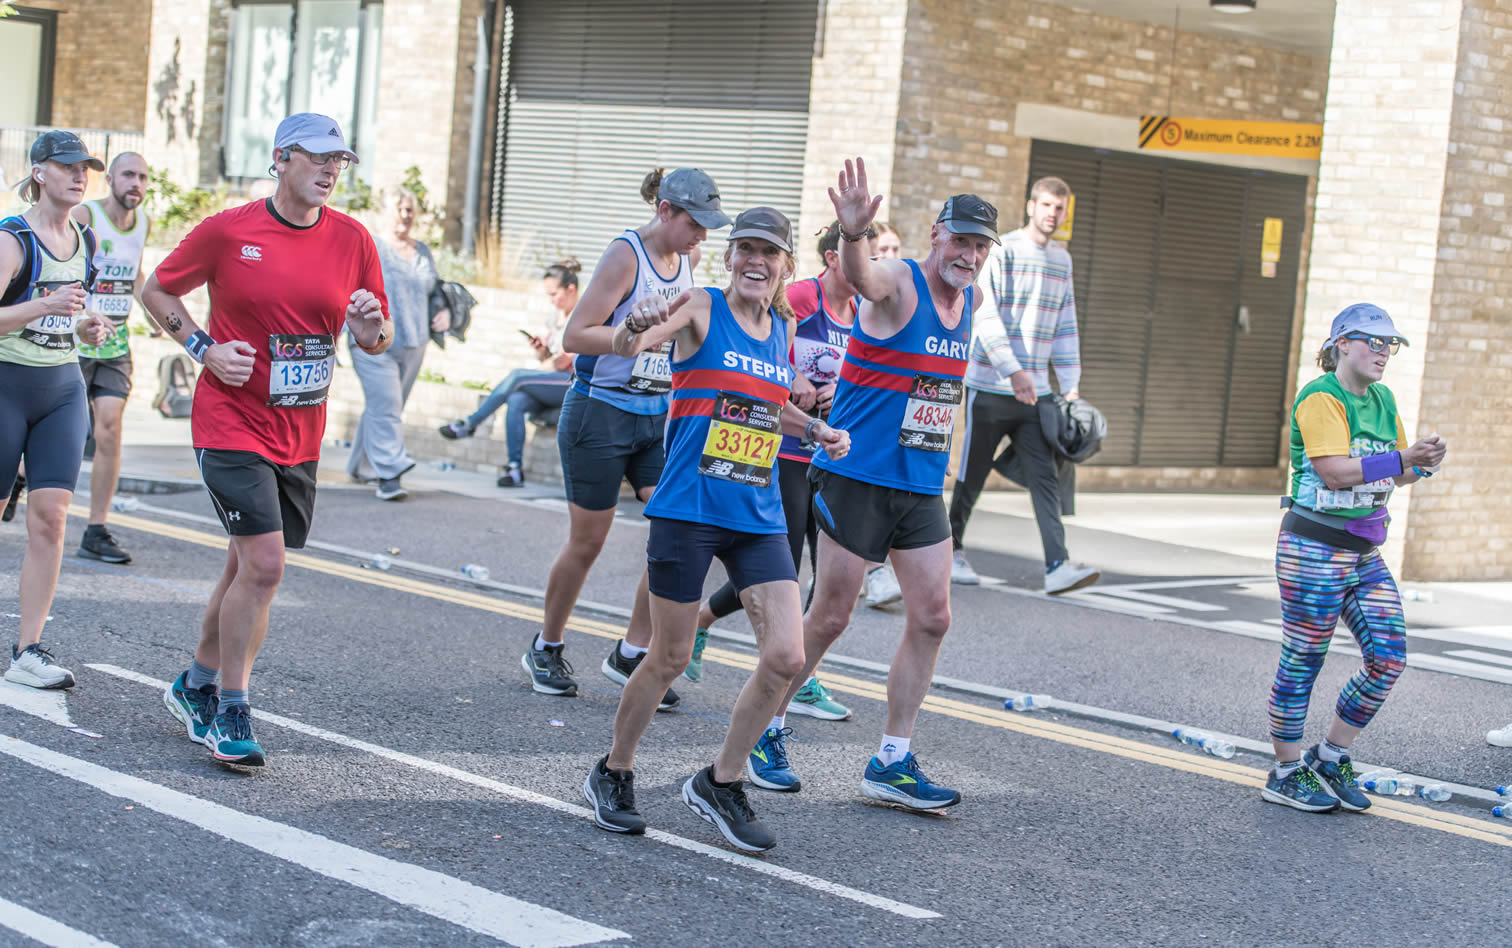 Bourton's Steph & Gary Holton at London Marathon - 2nd October 2022